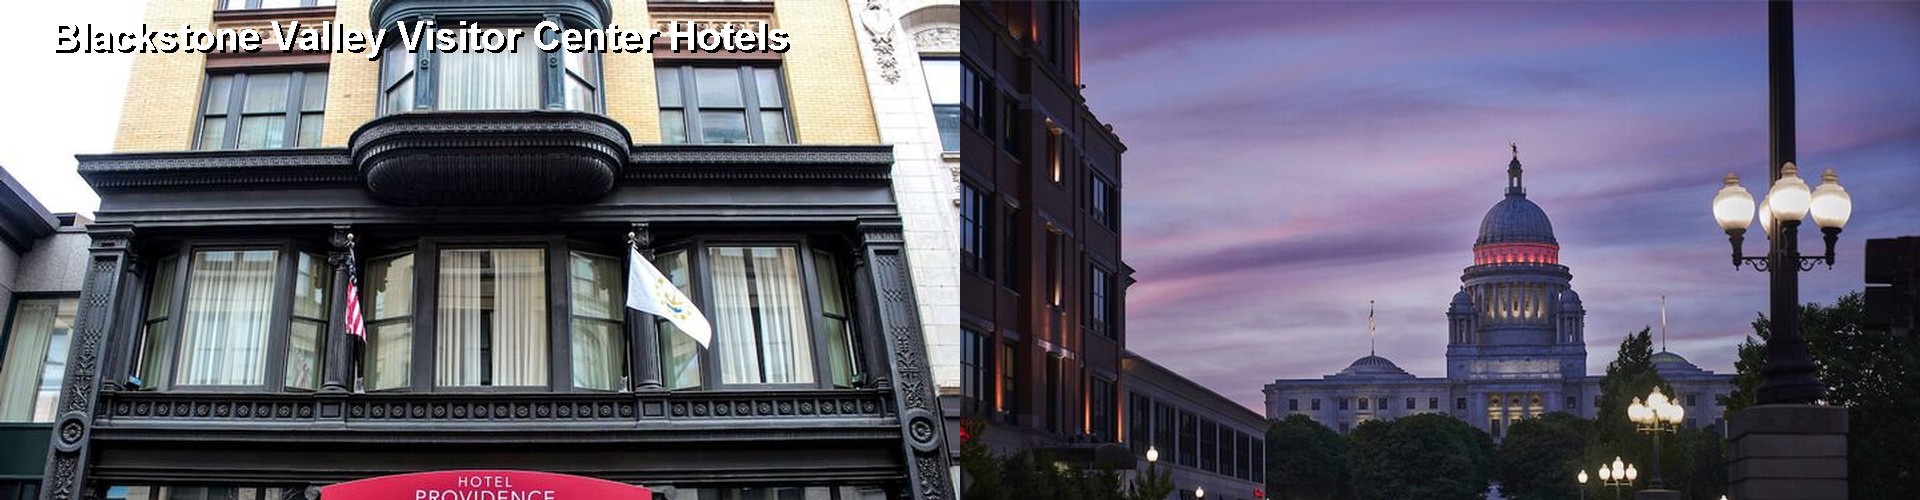 5 Best Hotels near Blackstone Valley Visitor Center